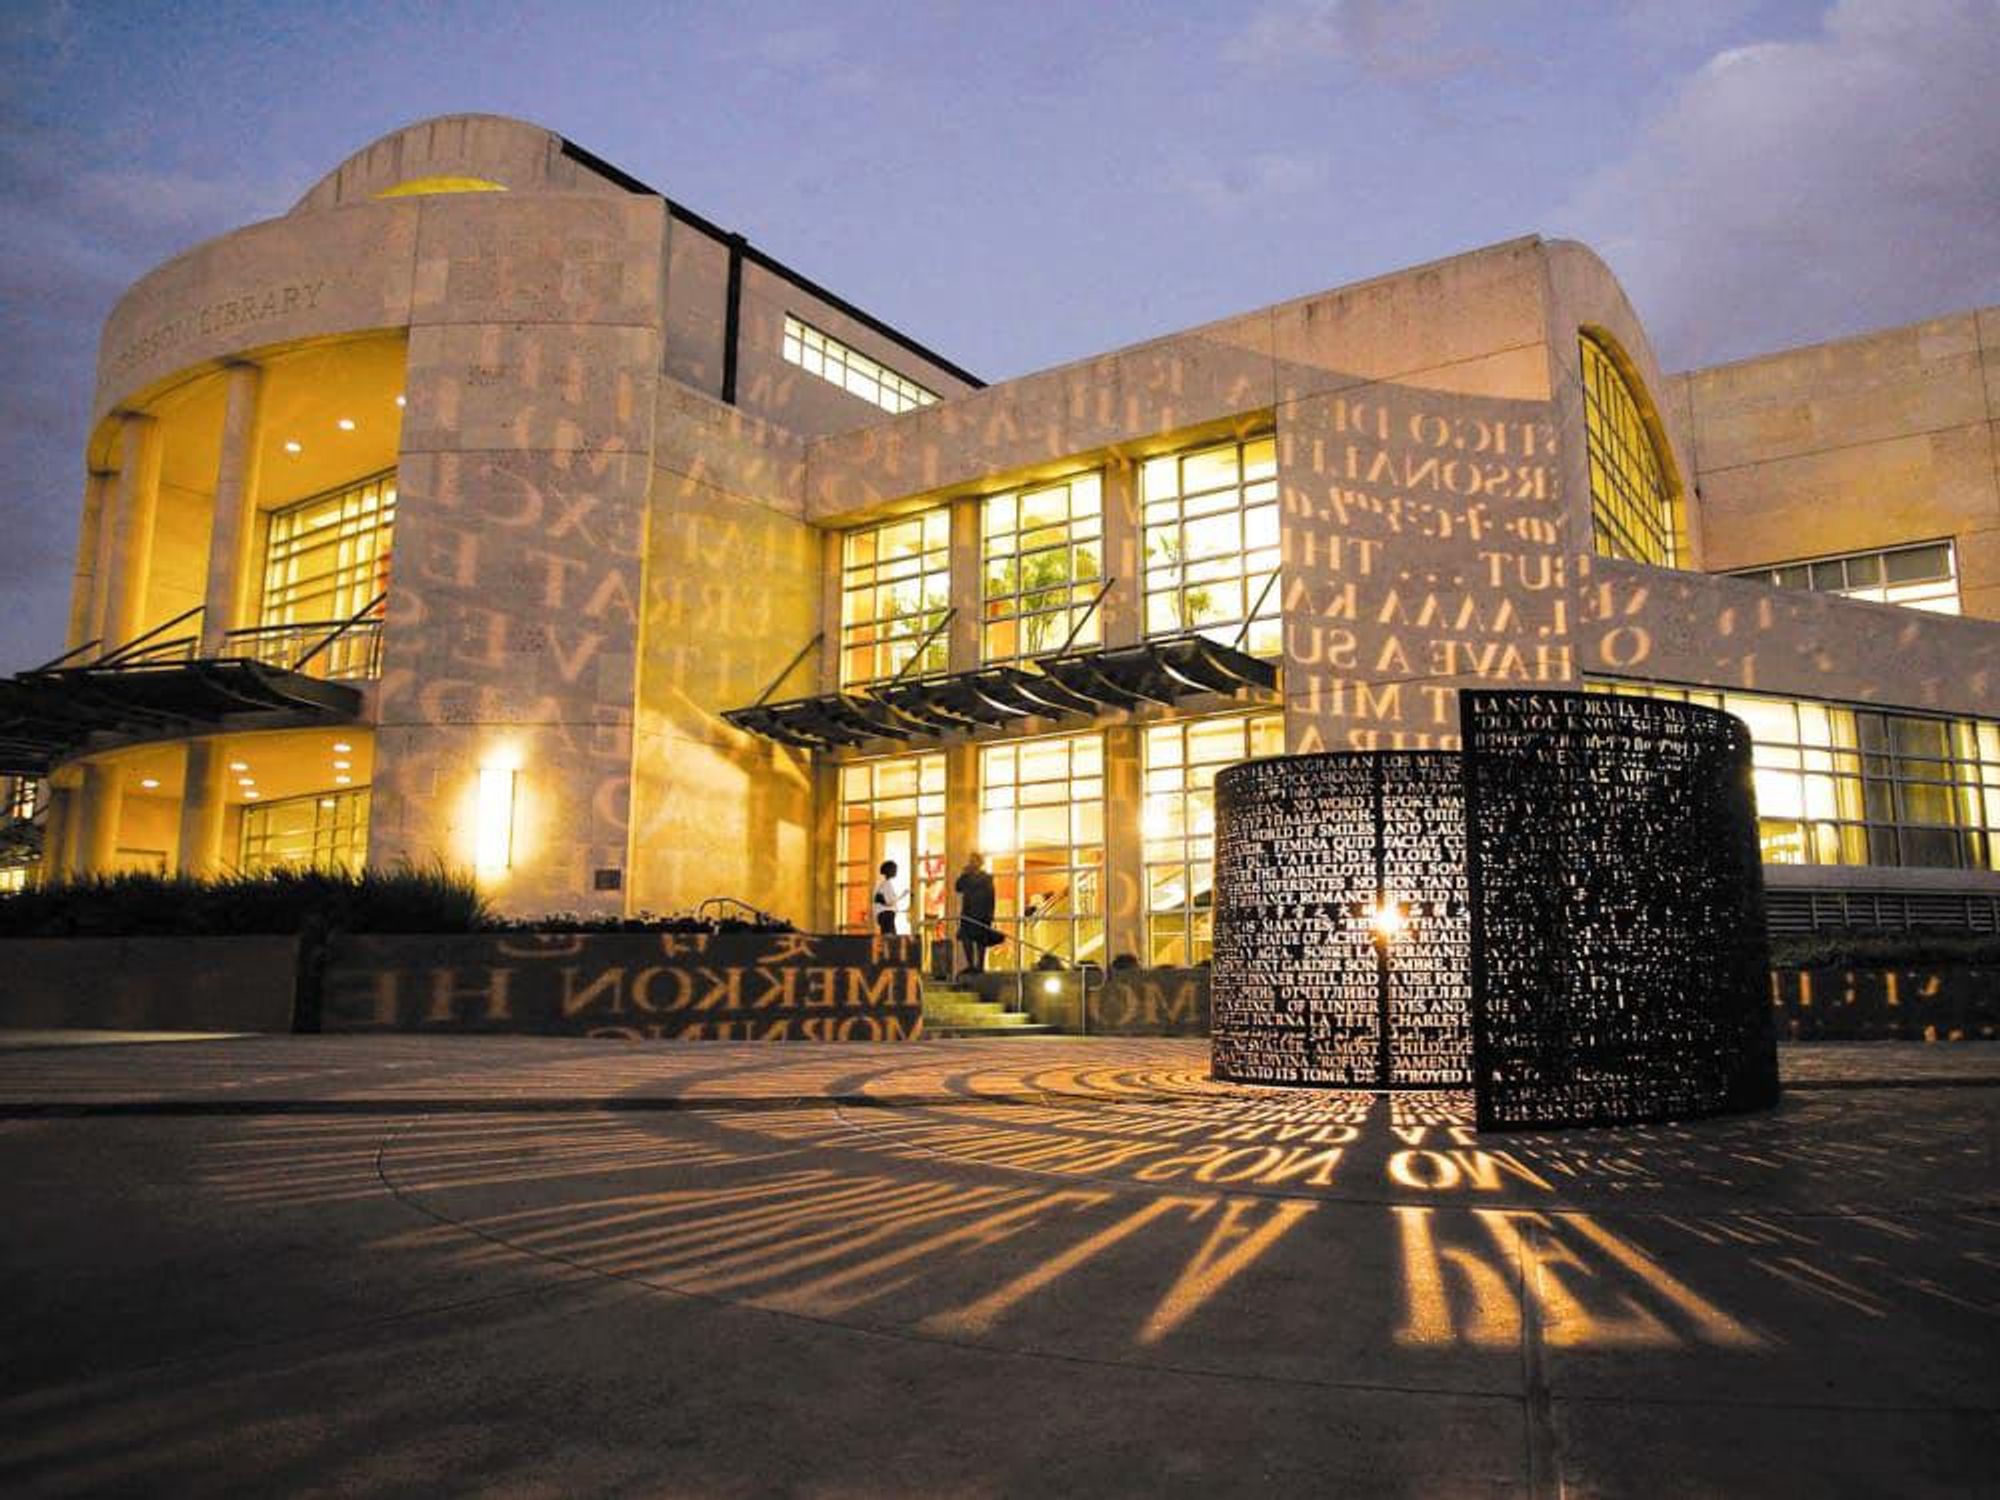 Places-Unique-University of Houston-library-exterior-night